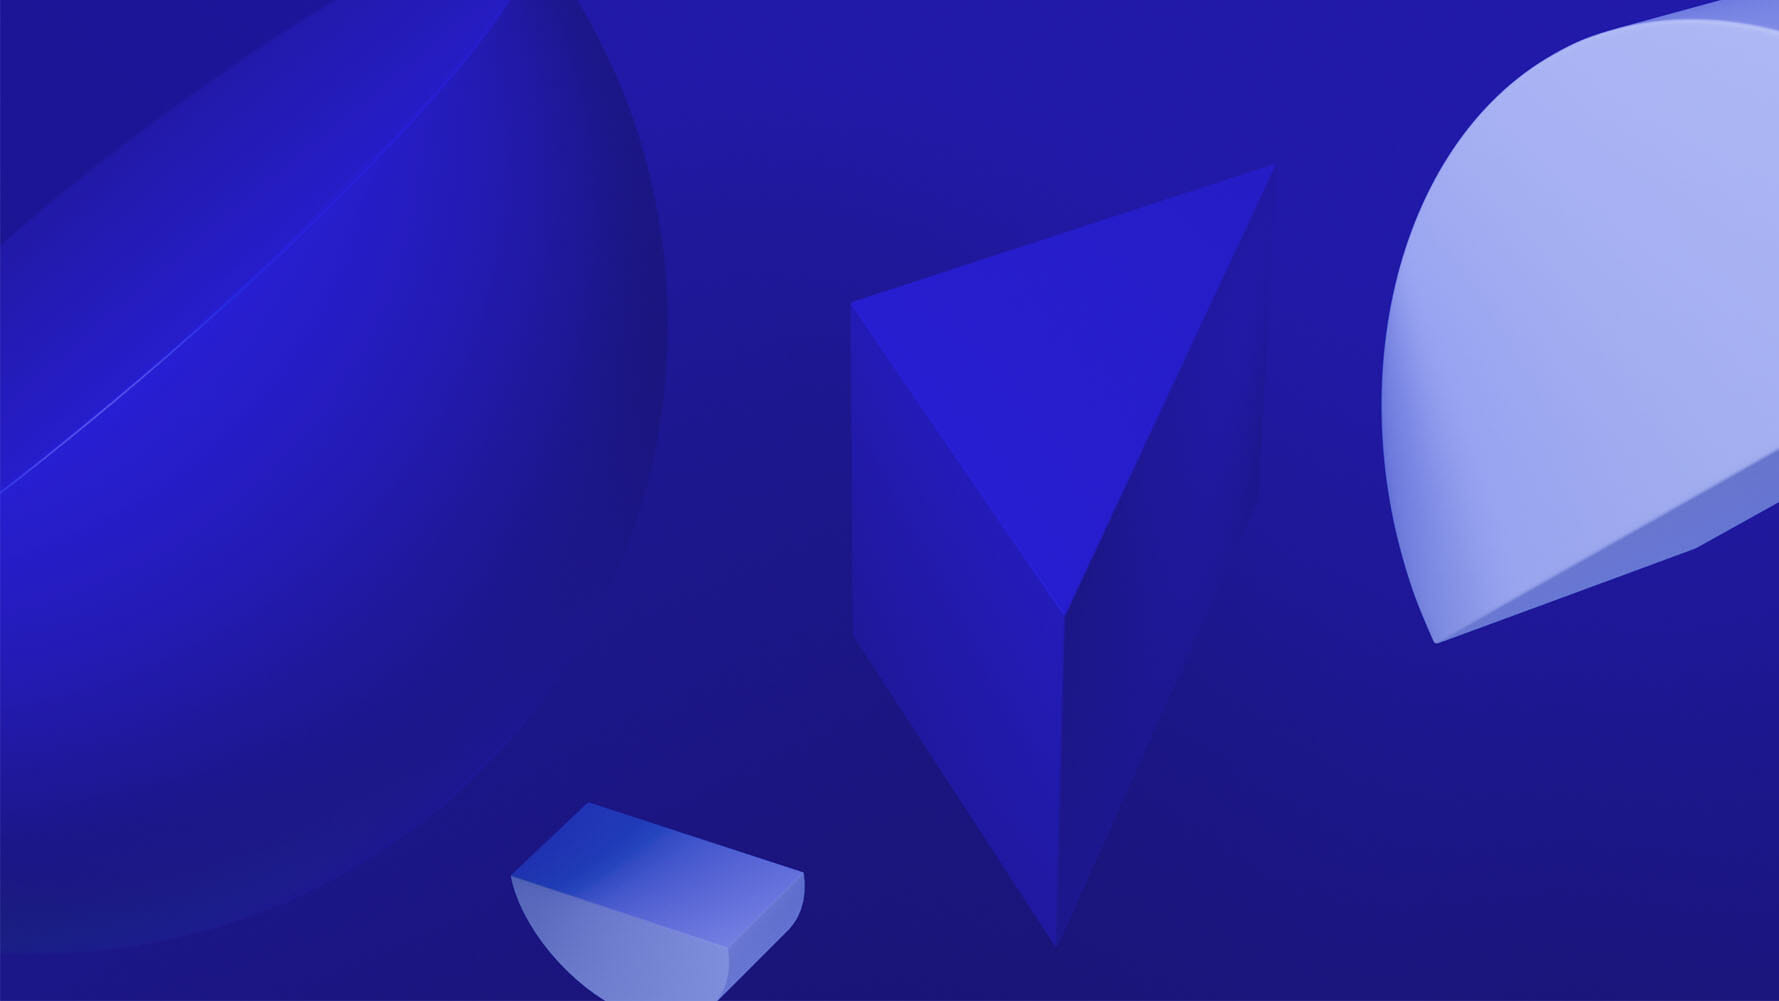 geometric 3d shapes scene deep blue